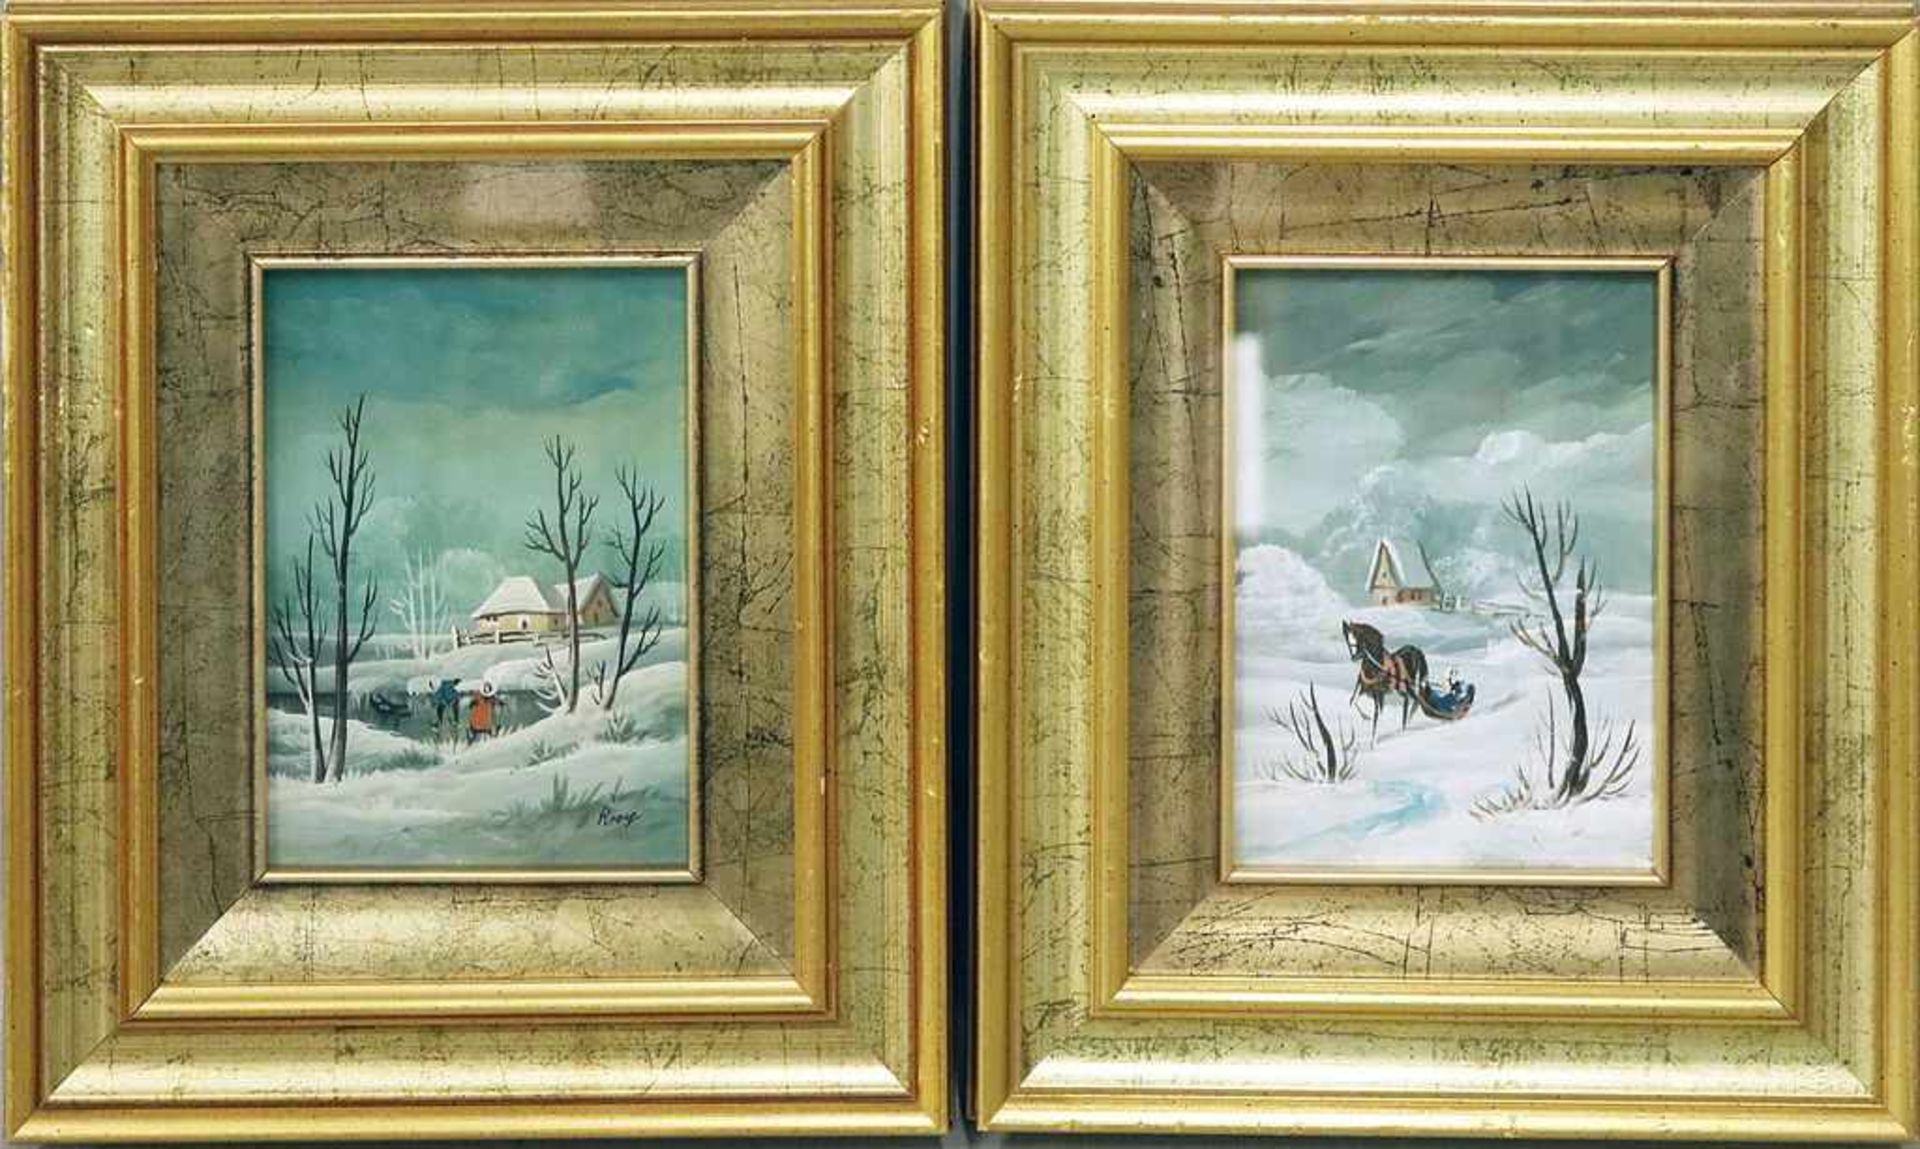 2 Bilder/Rahmen (20. Jh.)Winterlandschaften. Öl/Platte, 1x re. u. sign. "Roy"?. Ca. 18x 13 cm. R.